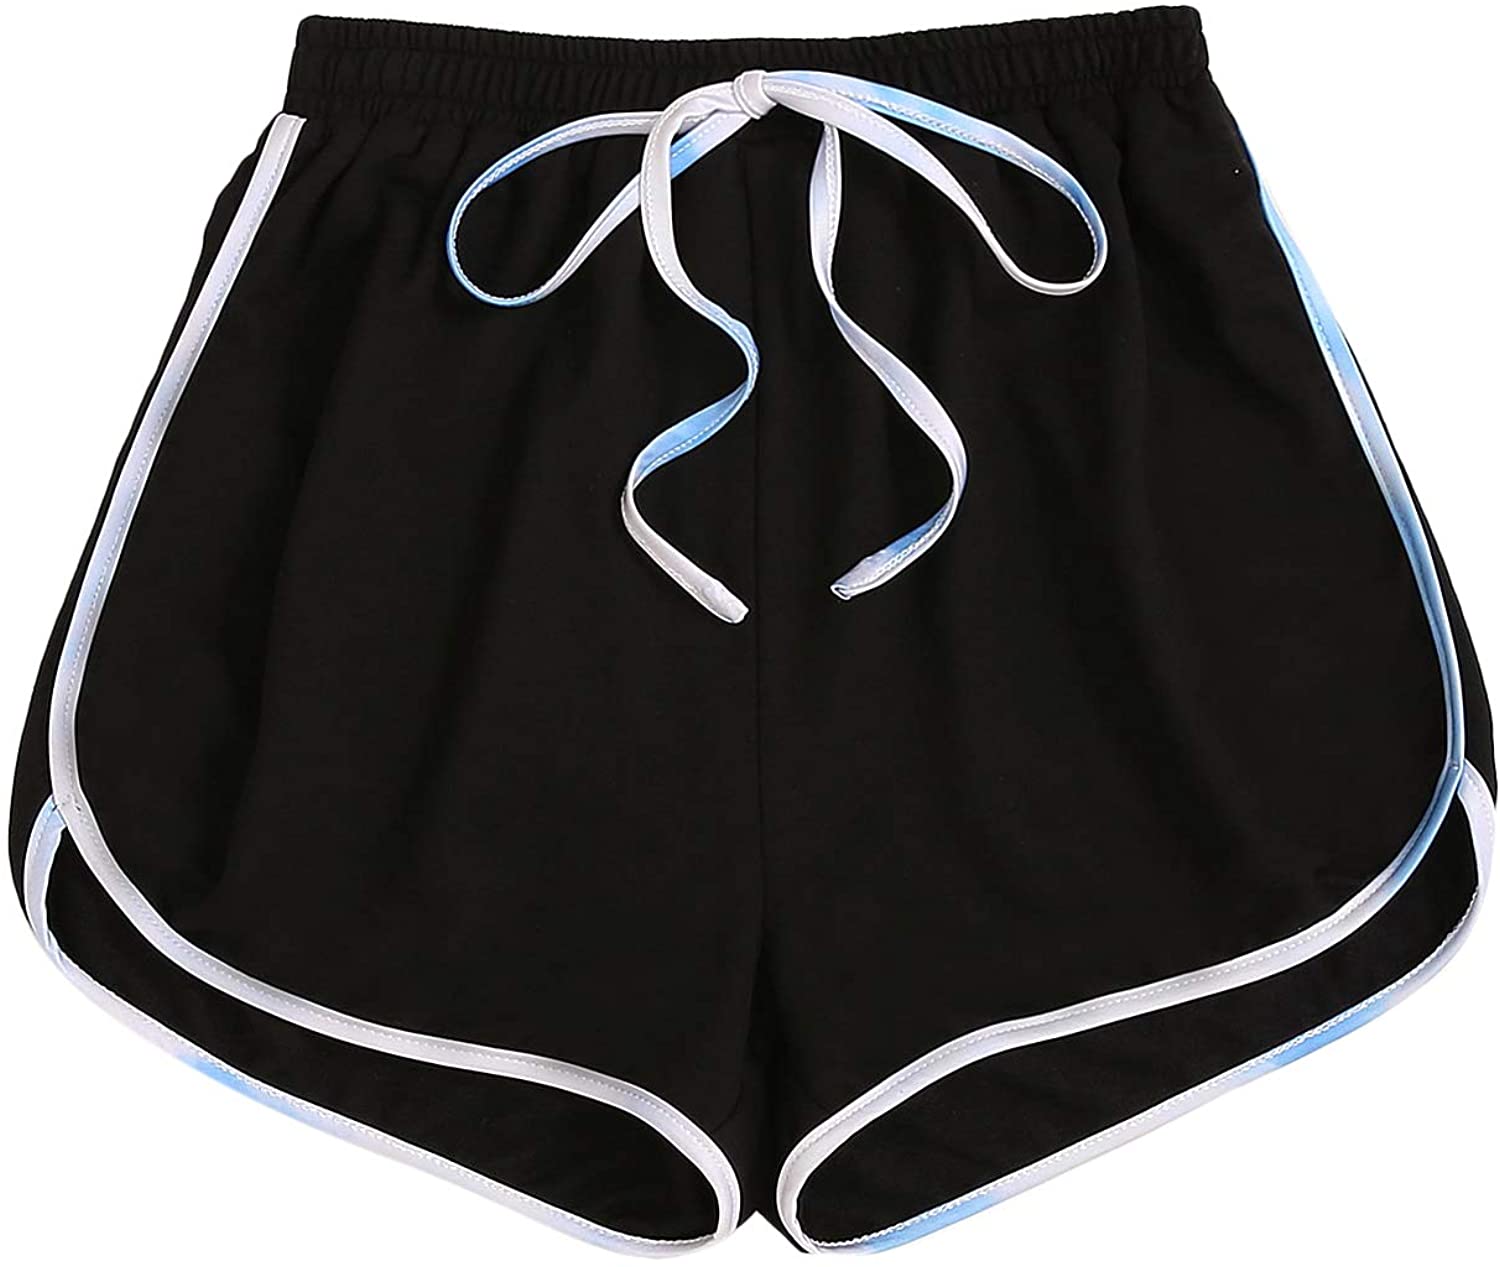 MakeMeChic Women's Casual Drawstring Waist Shorts Pocket Active Workout Track Shorts